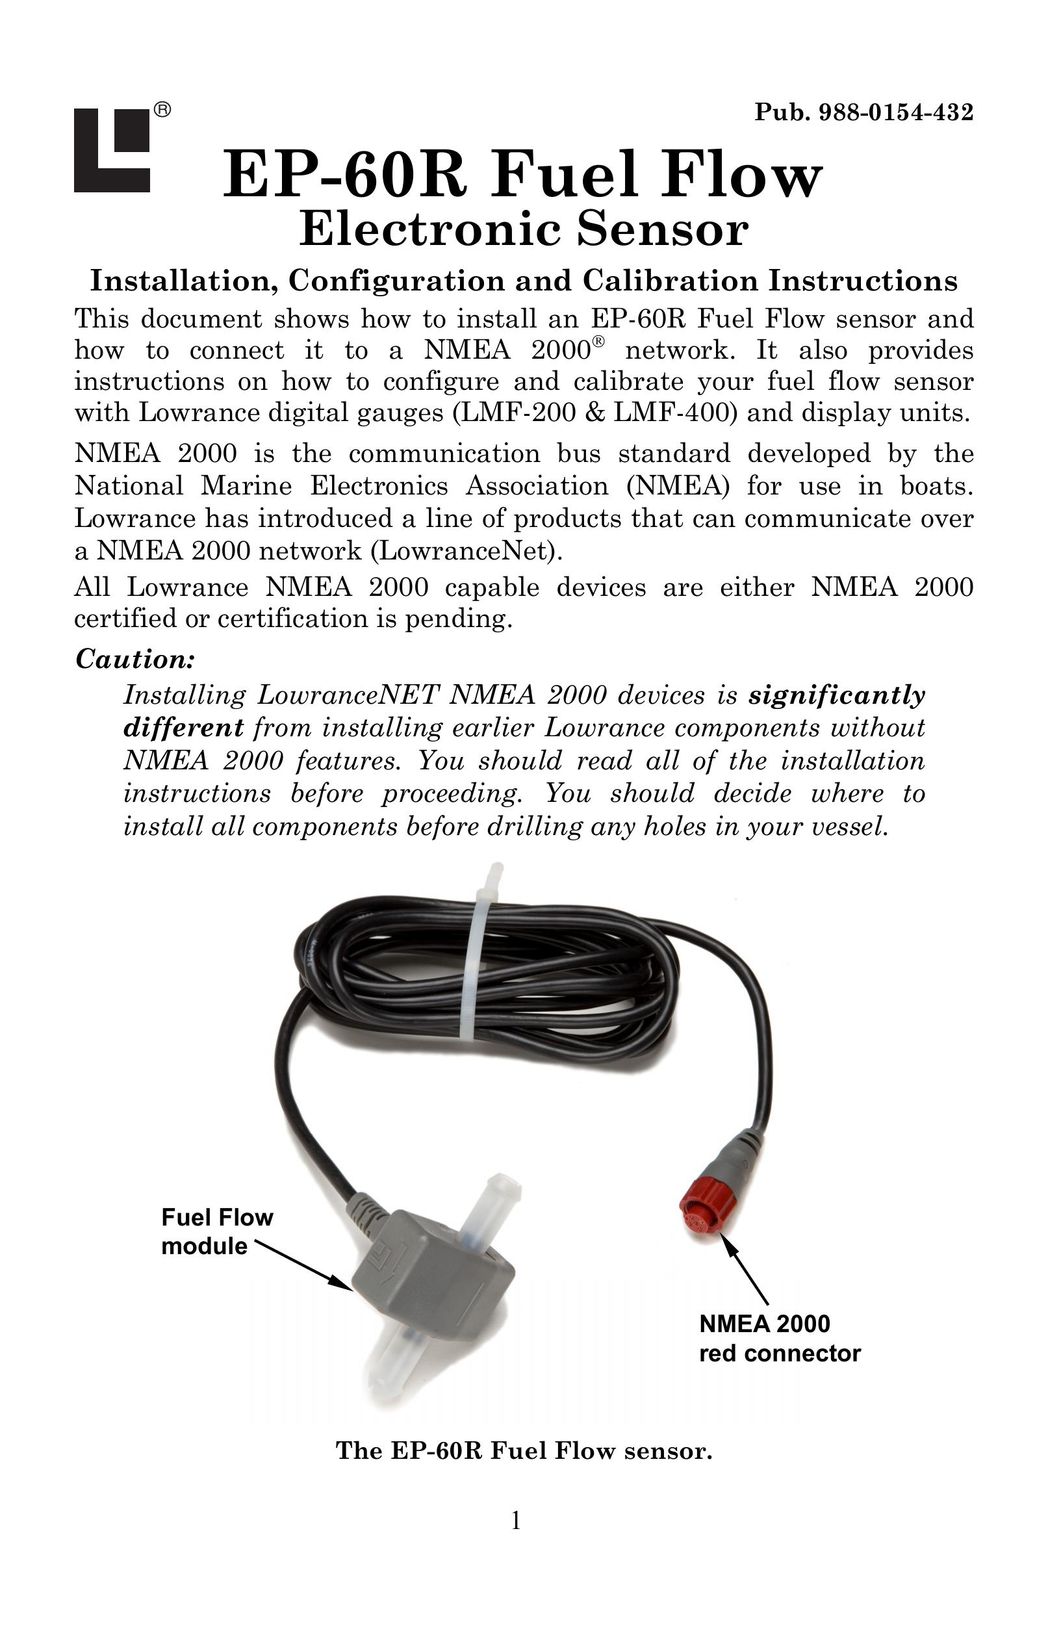 Lowrance electronic EP-60R Stud Sensor User Manual